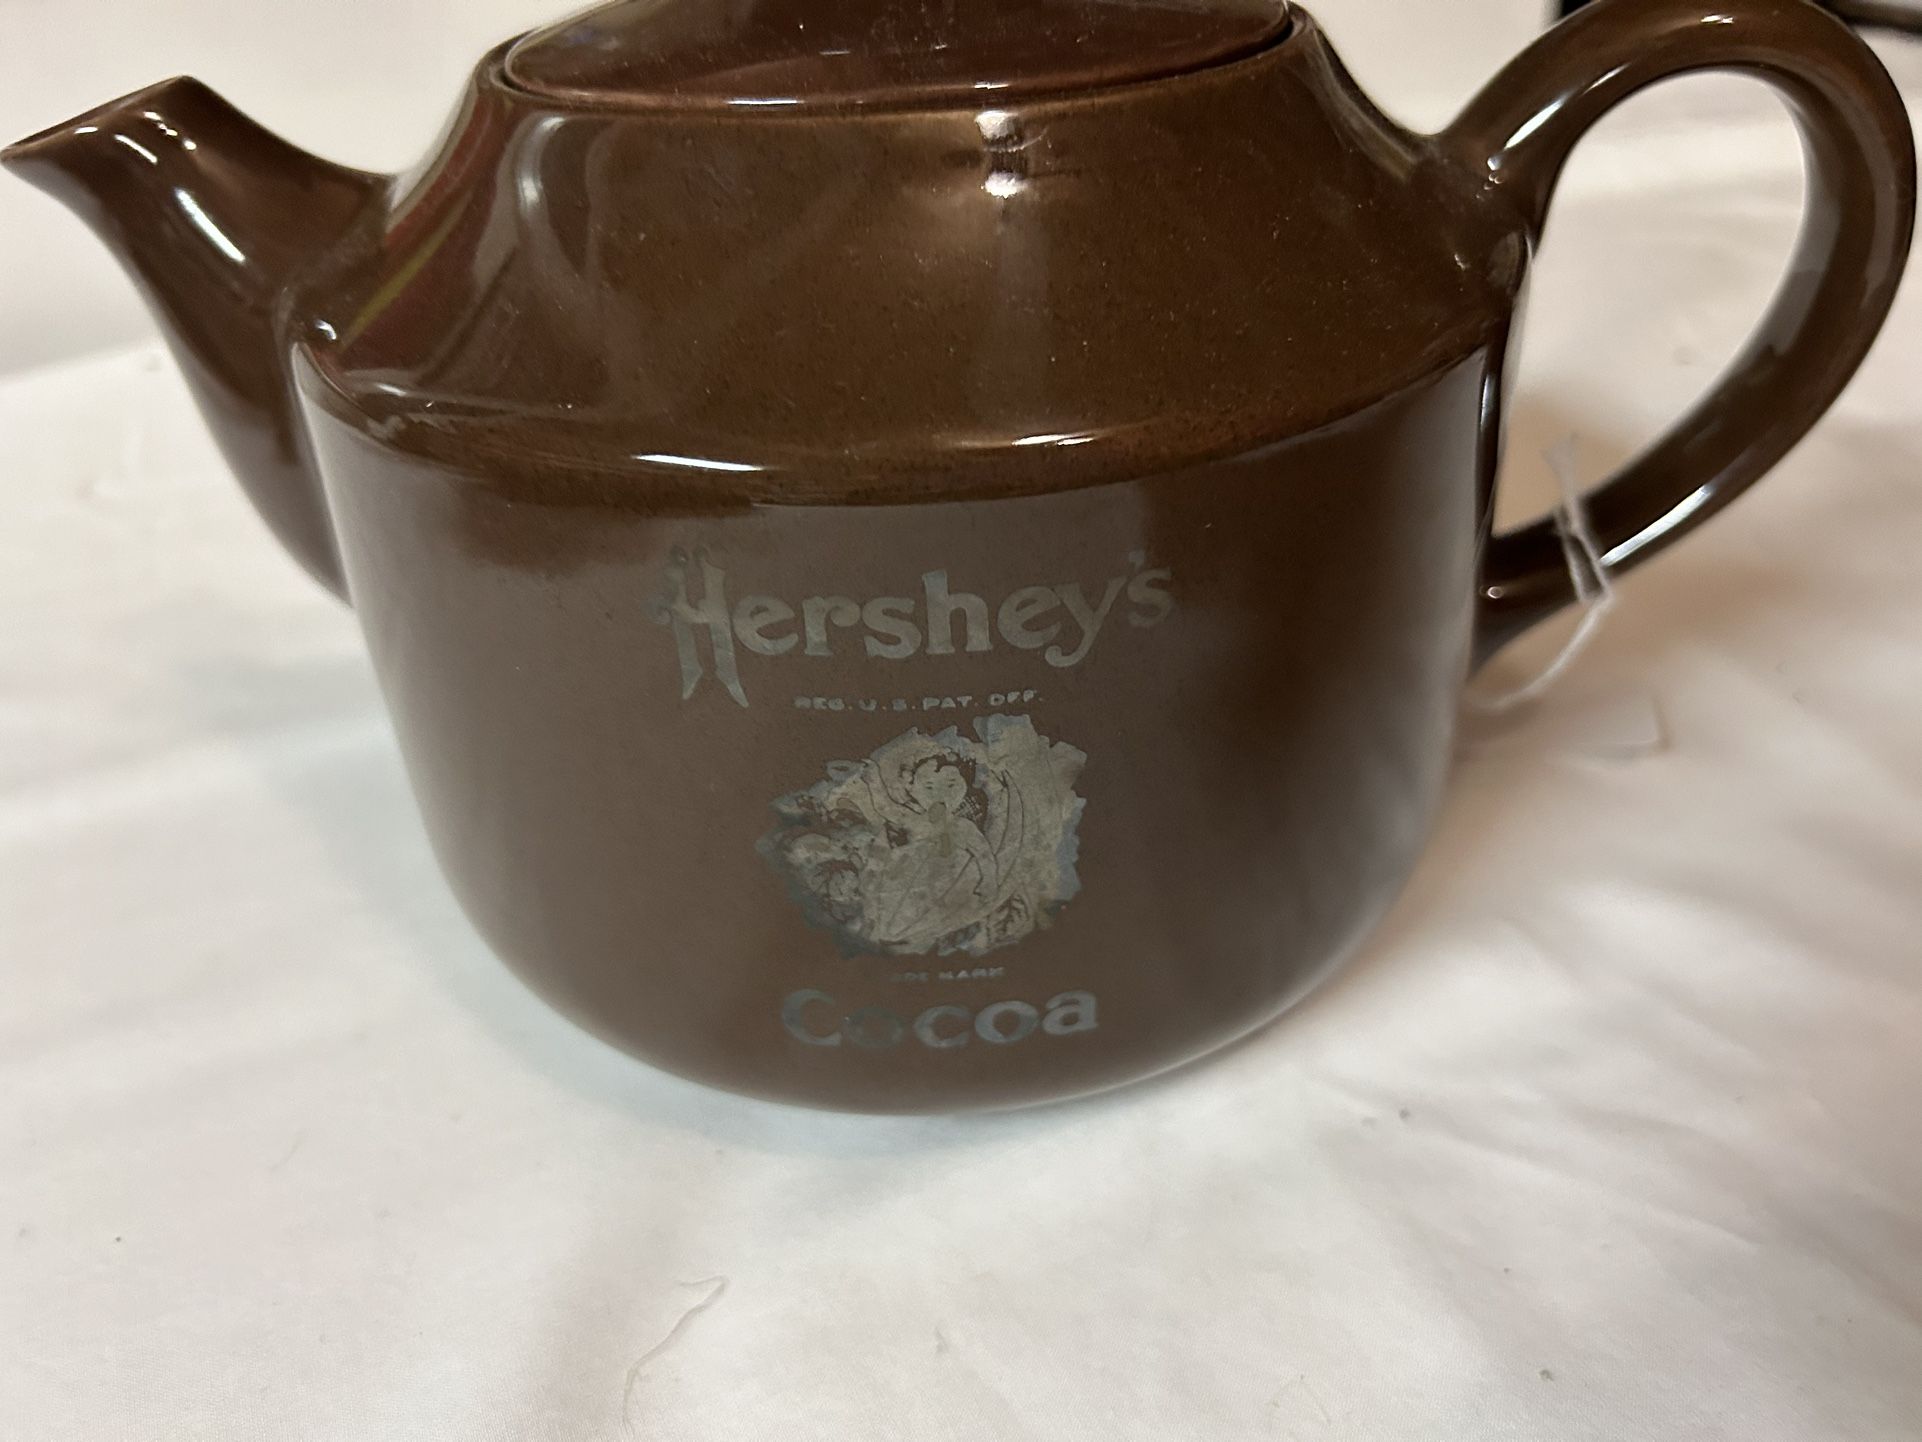 Hersheys Pot